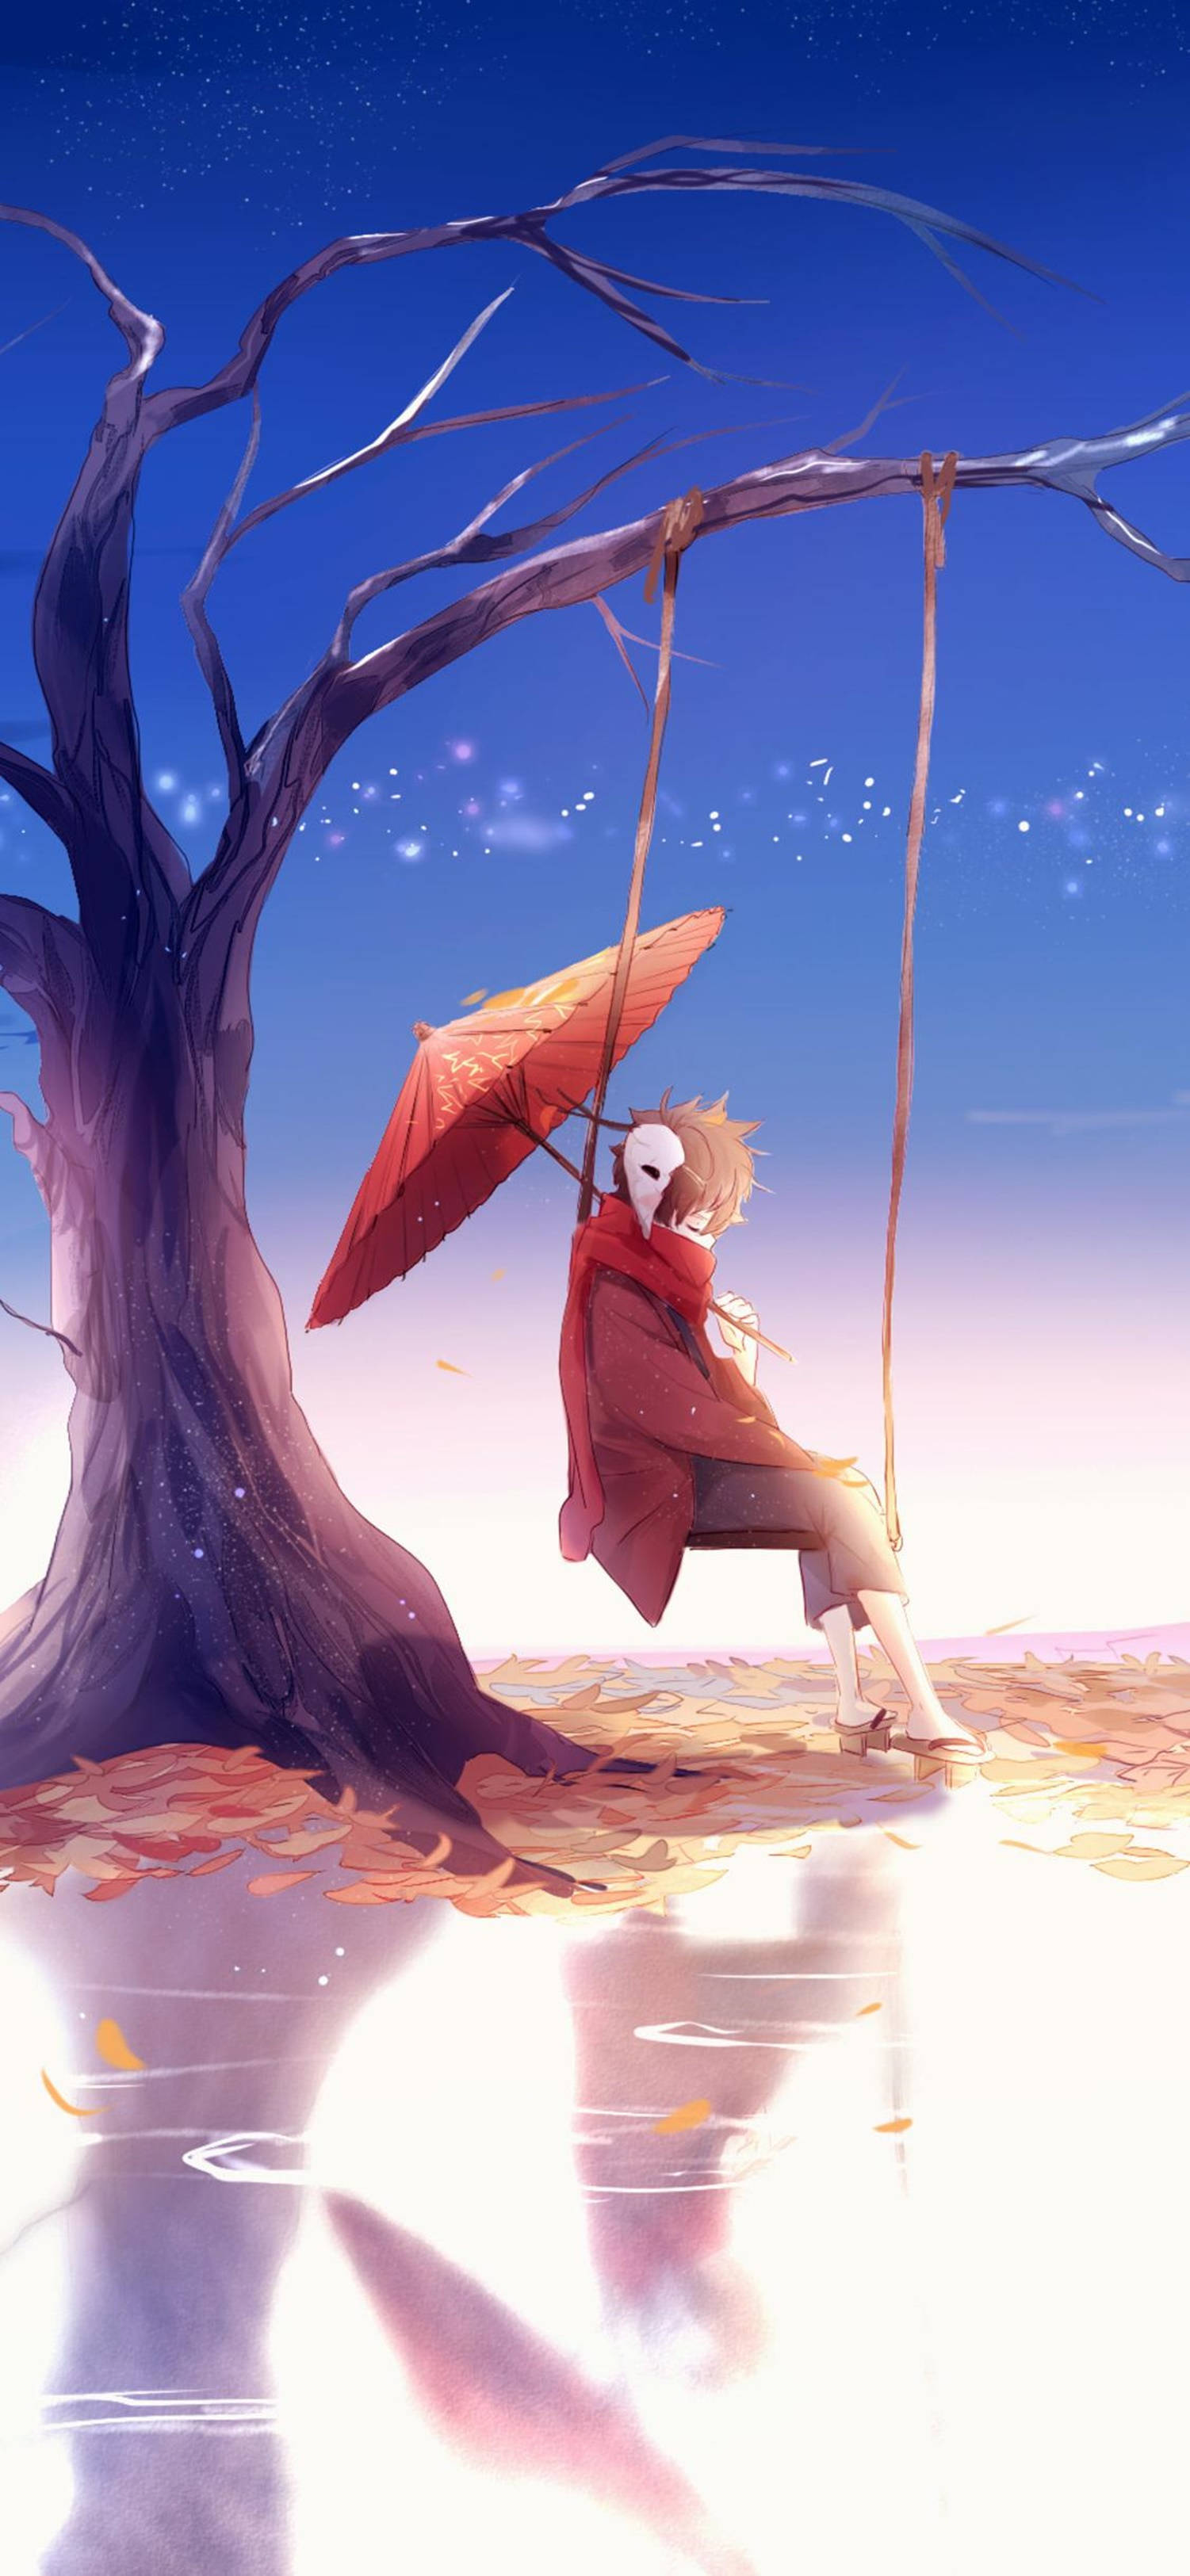 4k Anime Iphone Swing Boy With Umbrella